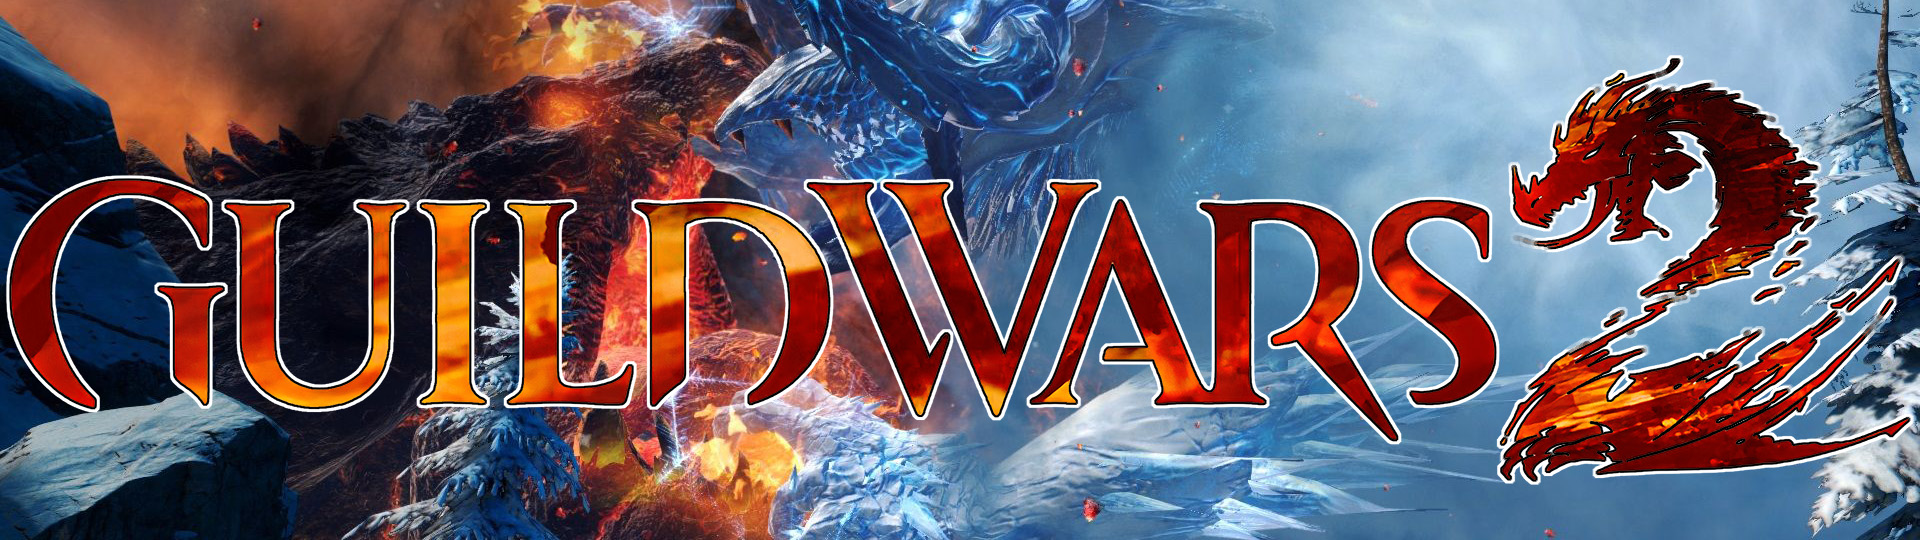 Personal story - Guild Wars 2 Wiki (GW2W)